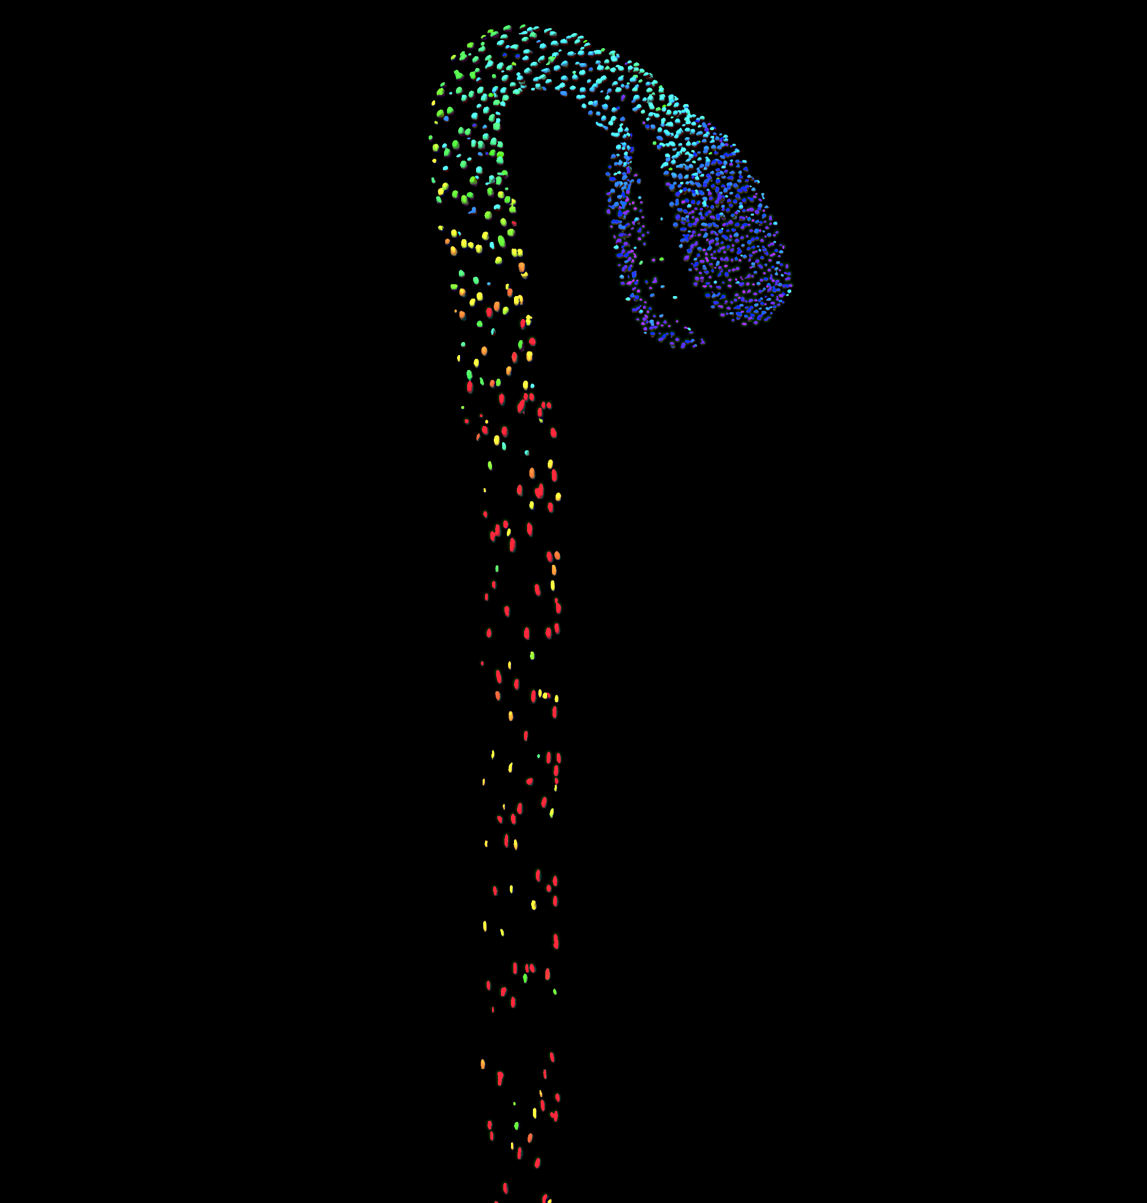 A fluorescent biosensor for GA hormone detected using a confocal microscope